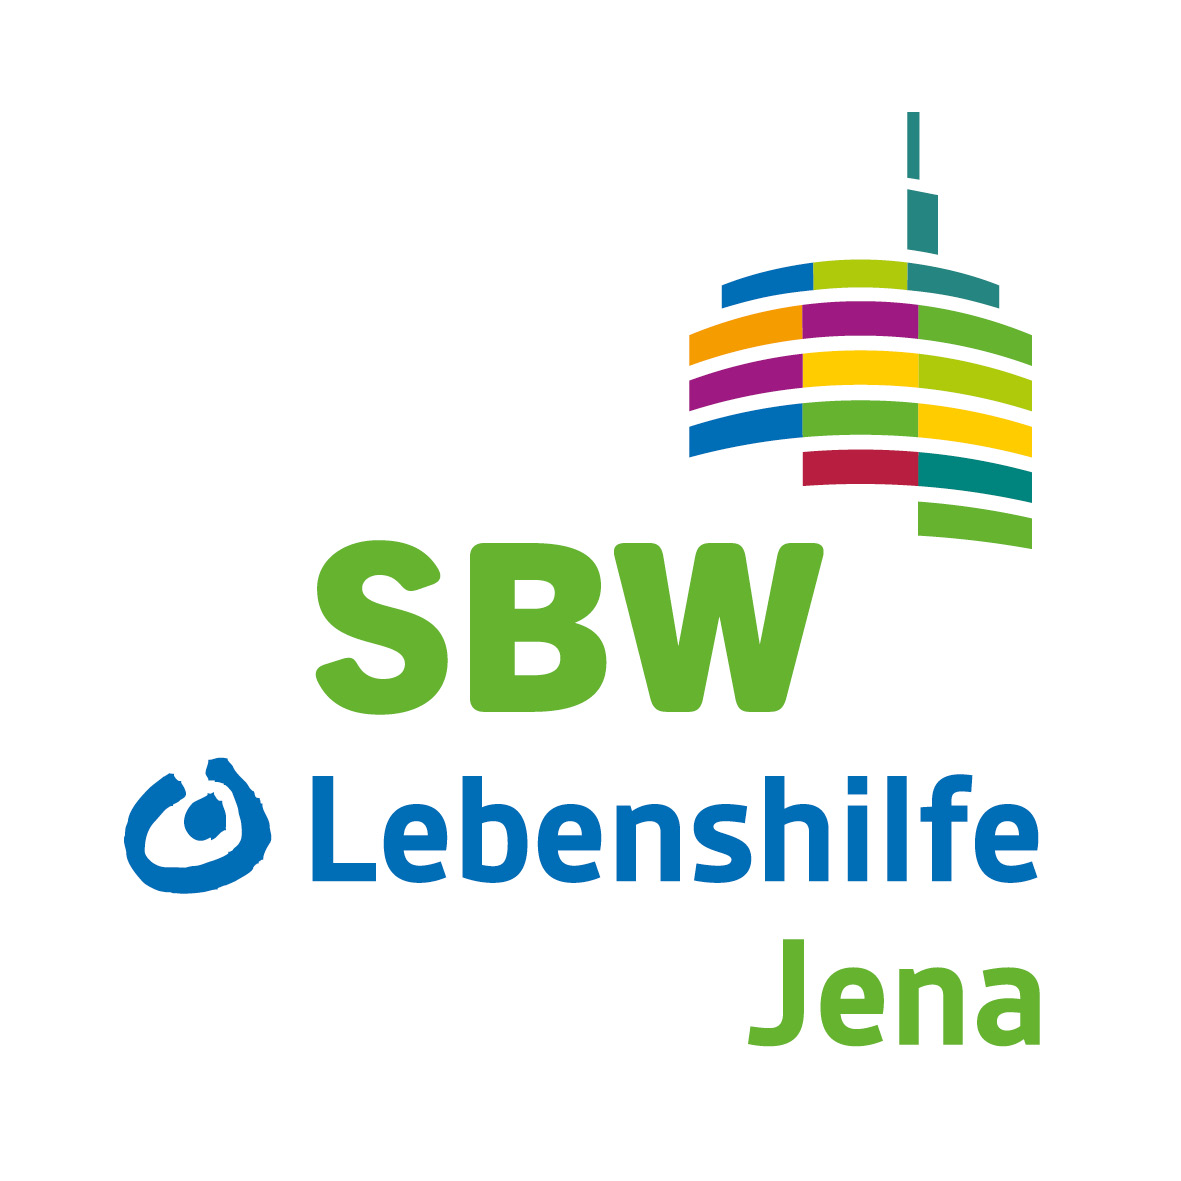 Neues Logo der SBW Lebenshilfe Jena mit einem bunten Turm